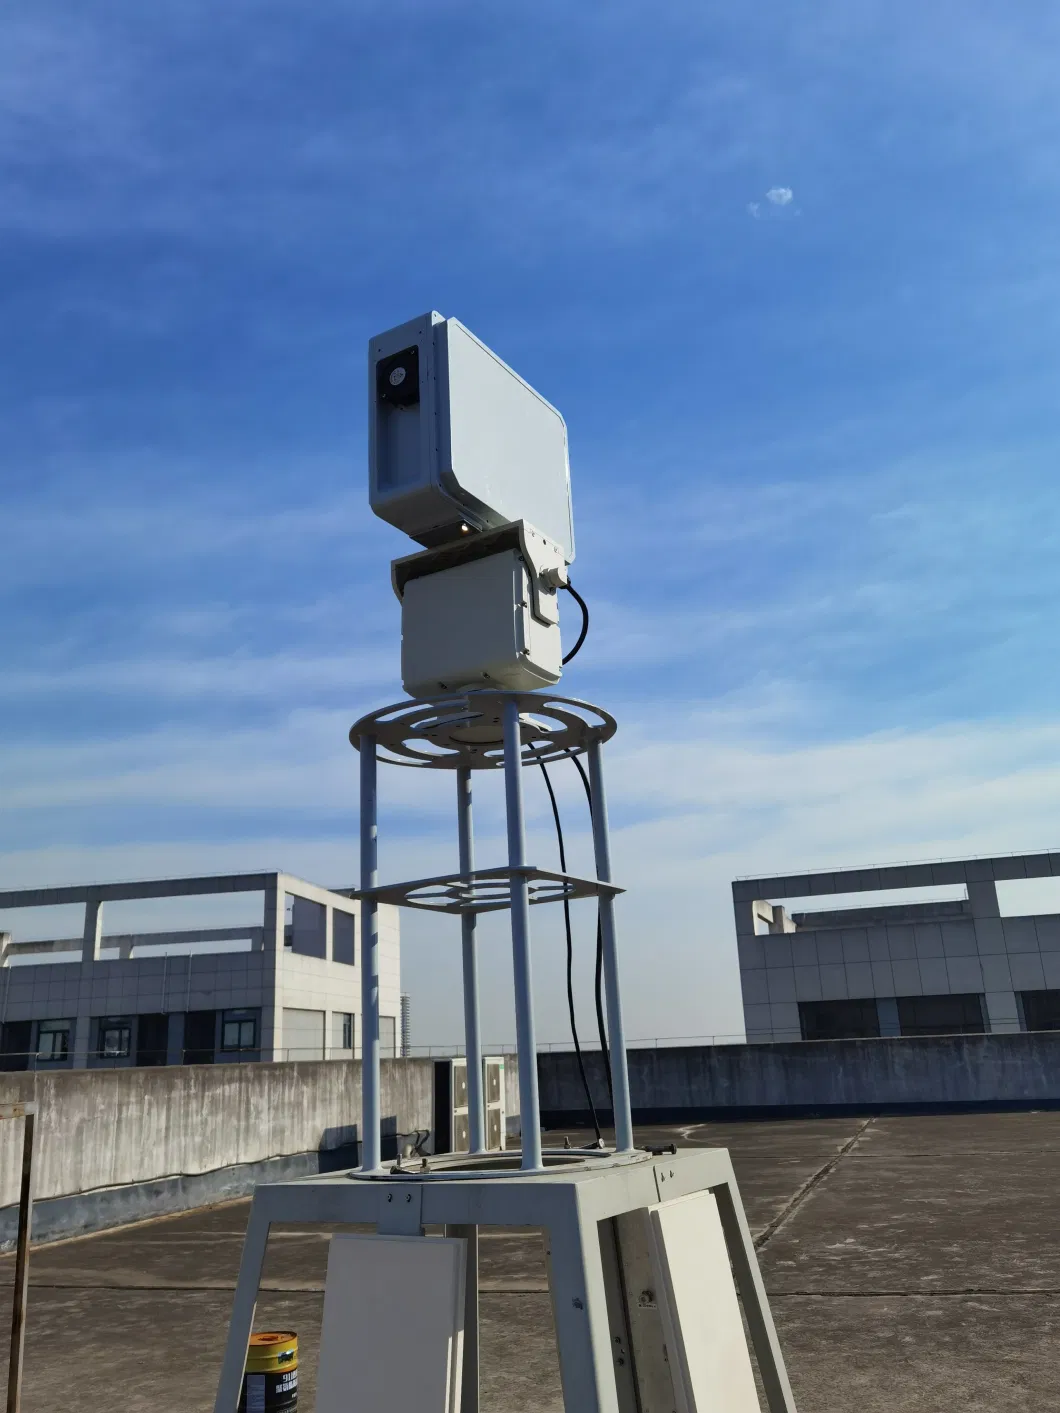 Sophisticatedperimeter Surveillance Radar to Provides The Best in Ground Target Detection for Border